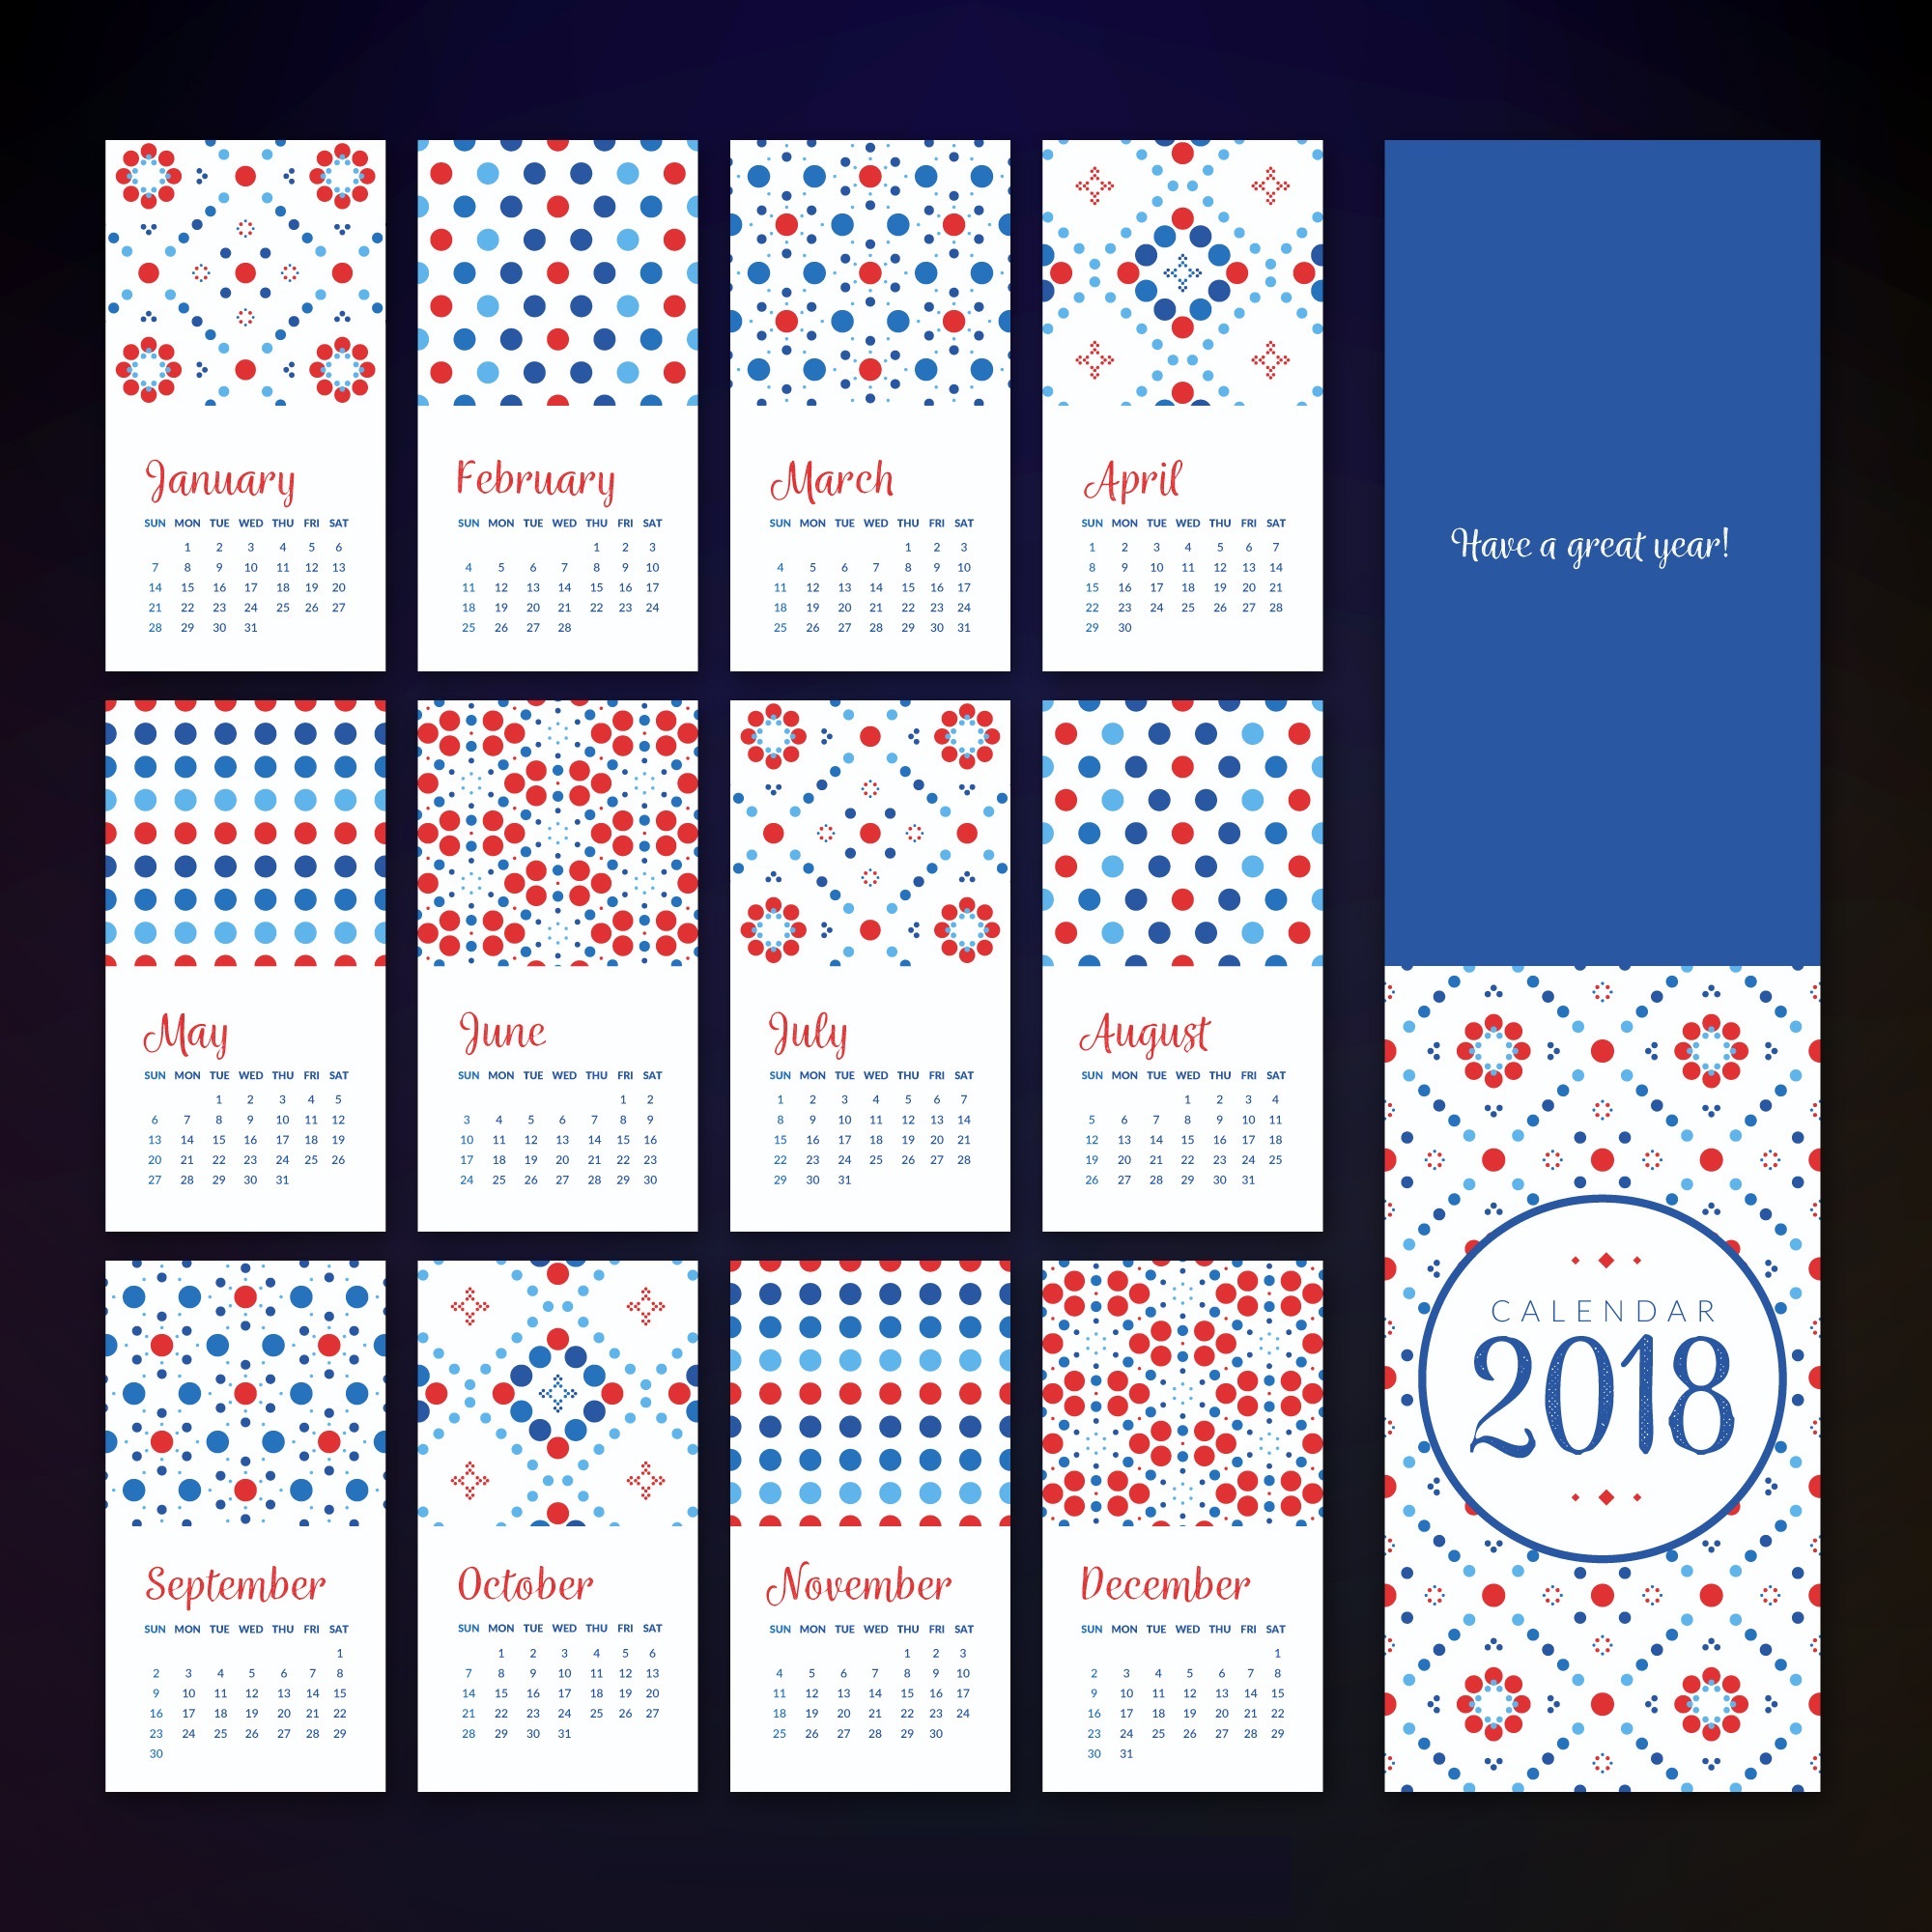 2018 Year Calendar Wallpaper Download Free 2018 Calendar